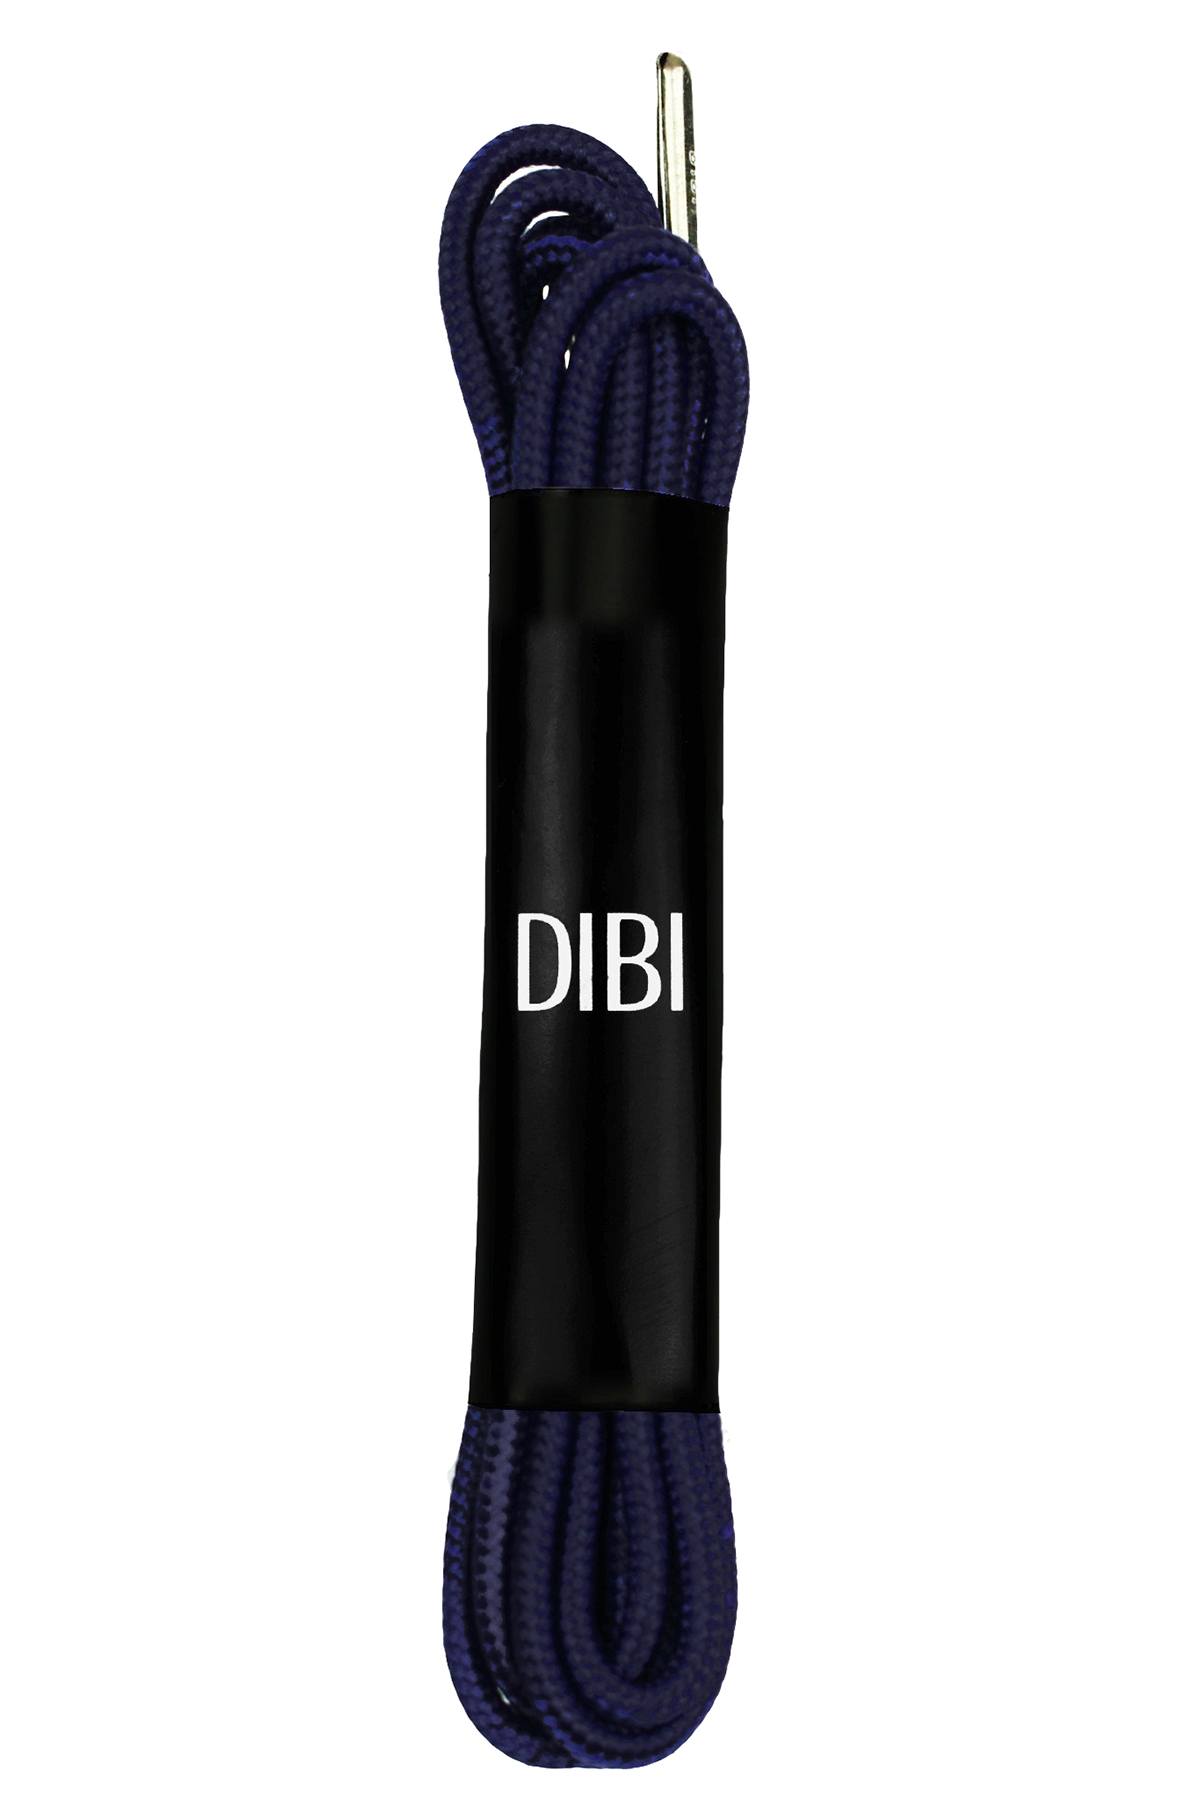 DIBI Solid Dark-Navy Dress Shoelaces w/ Silver Aglets